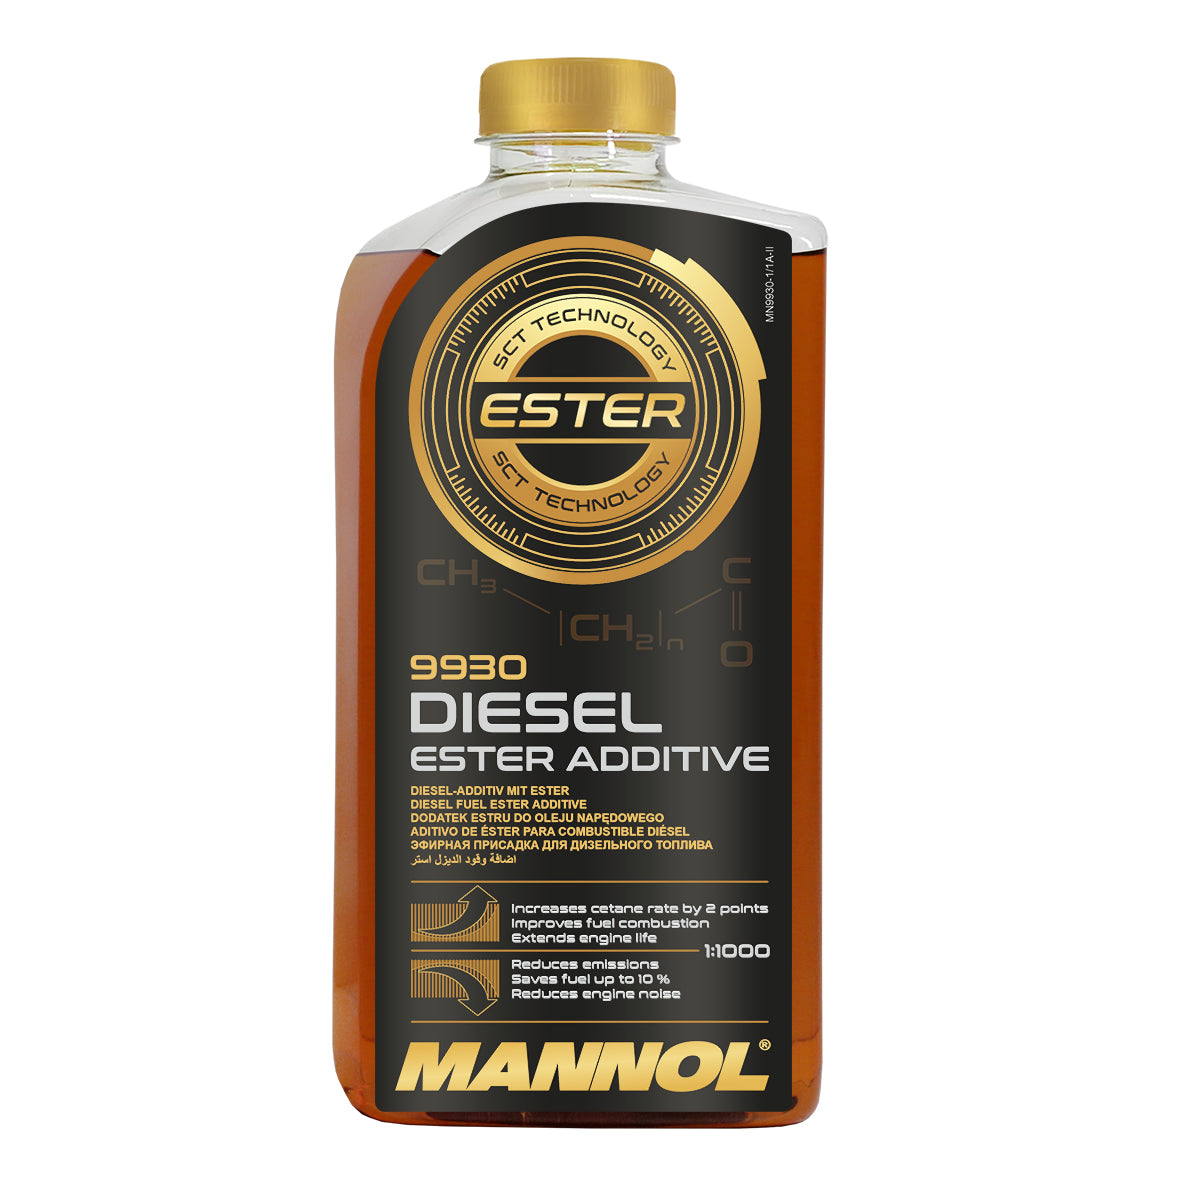 Mannol - 9930 Diesel Ester Additive